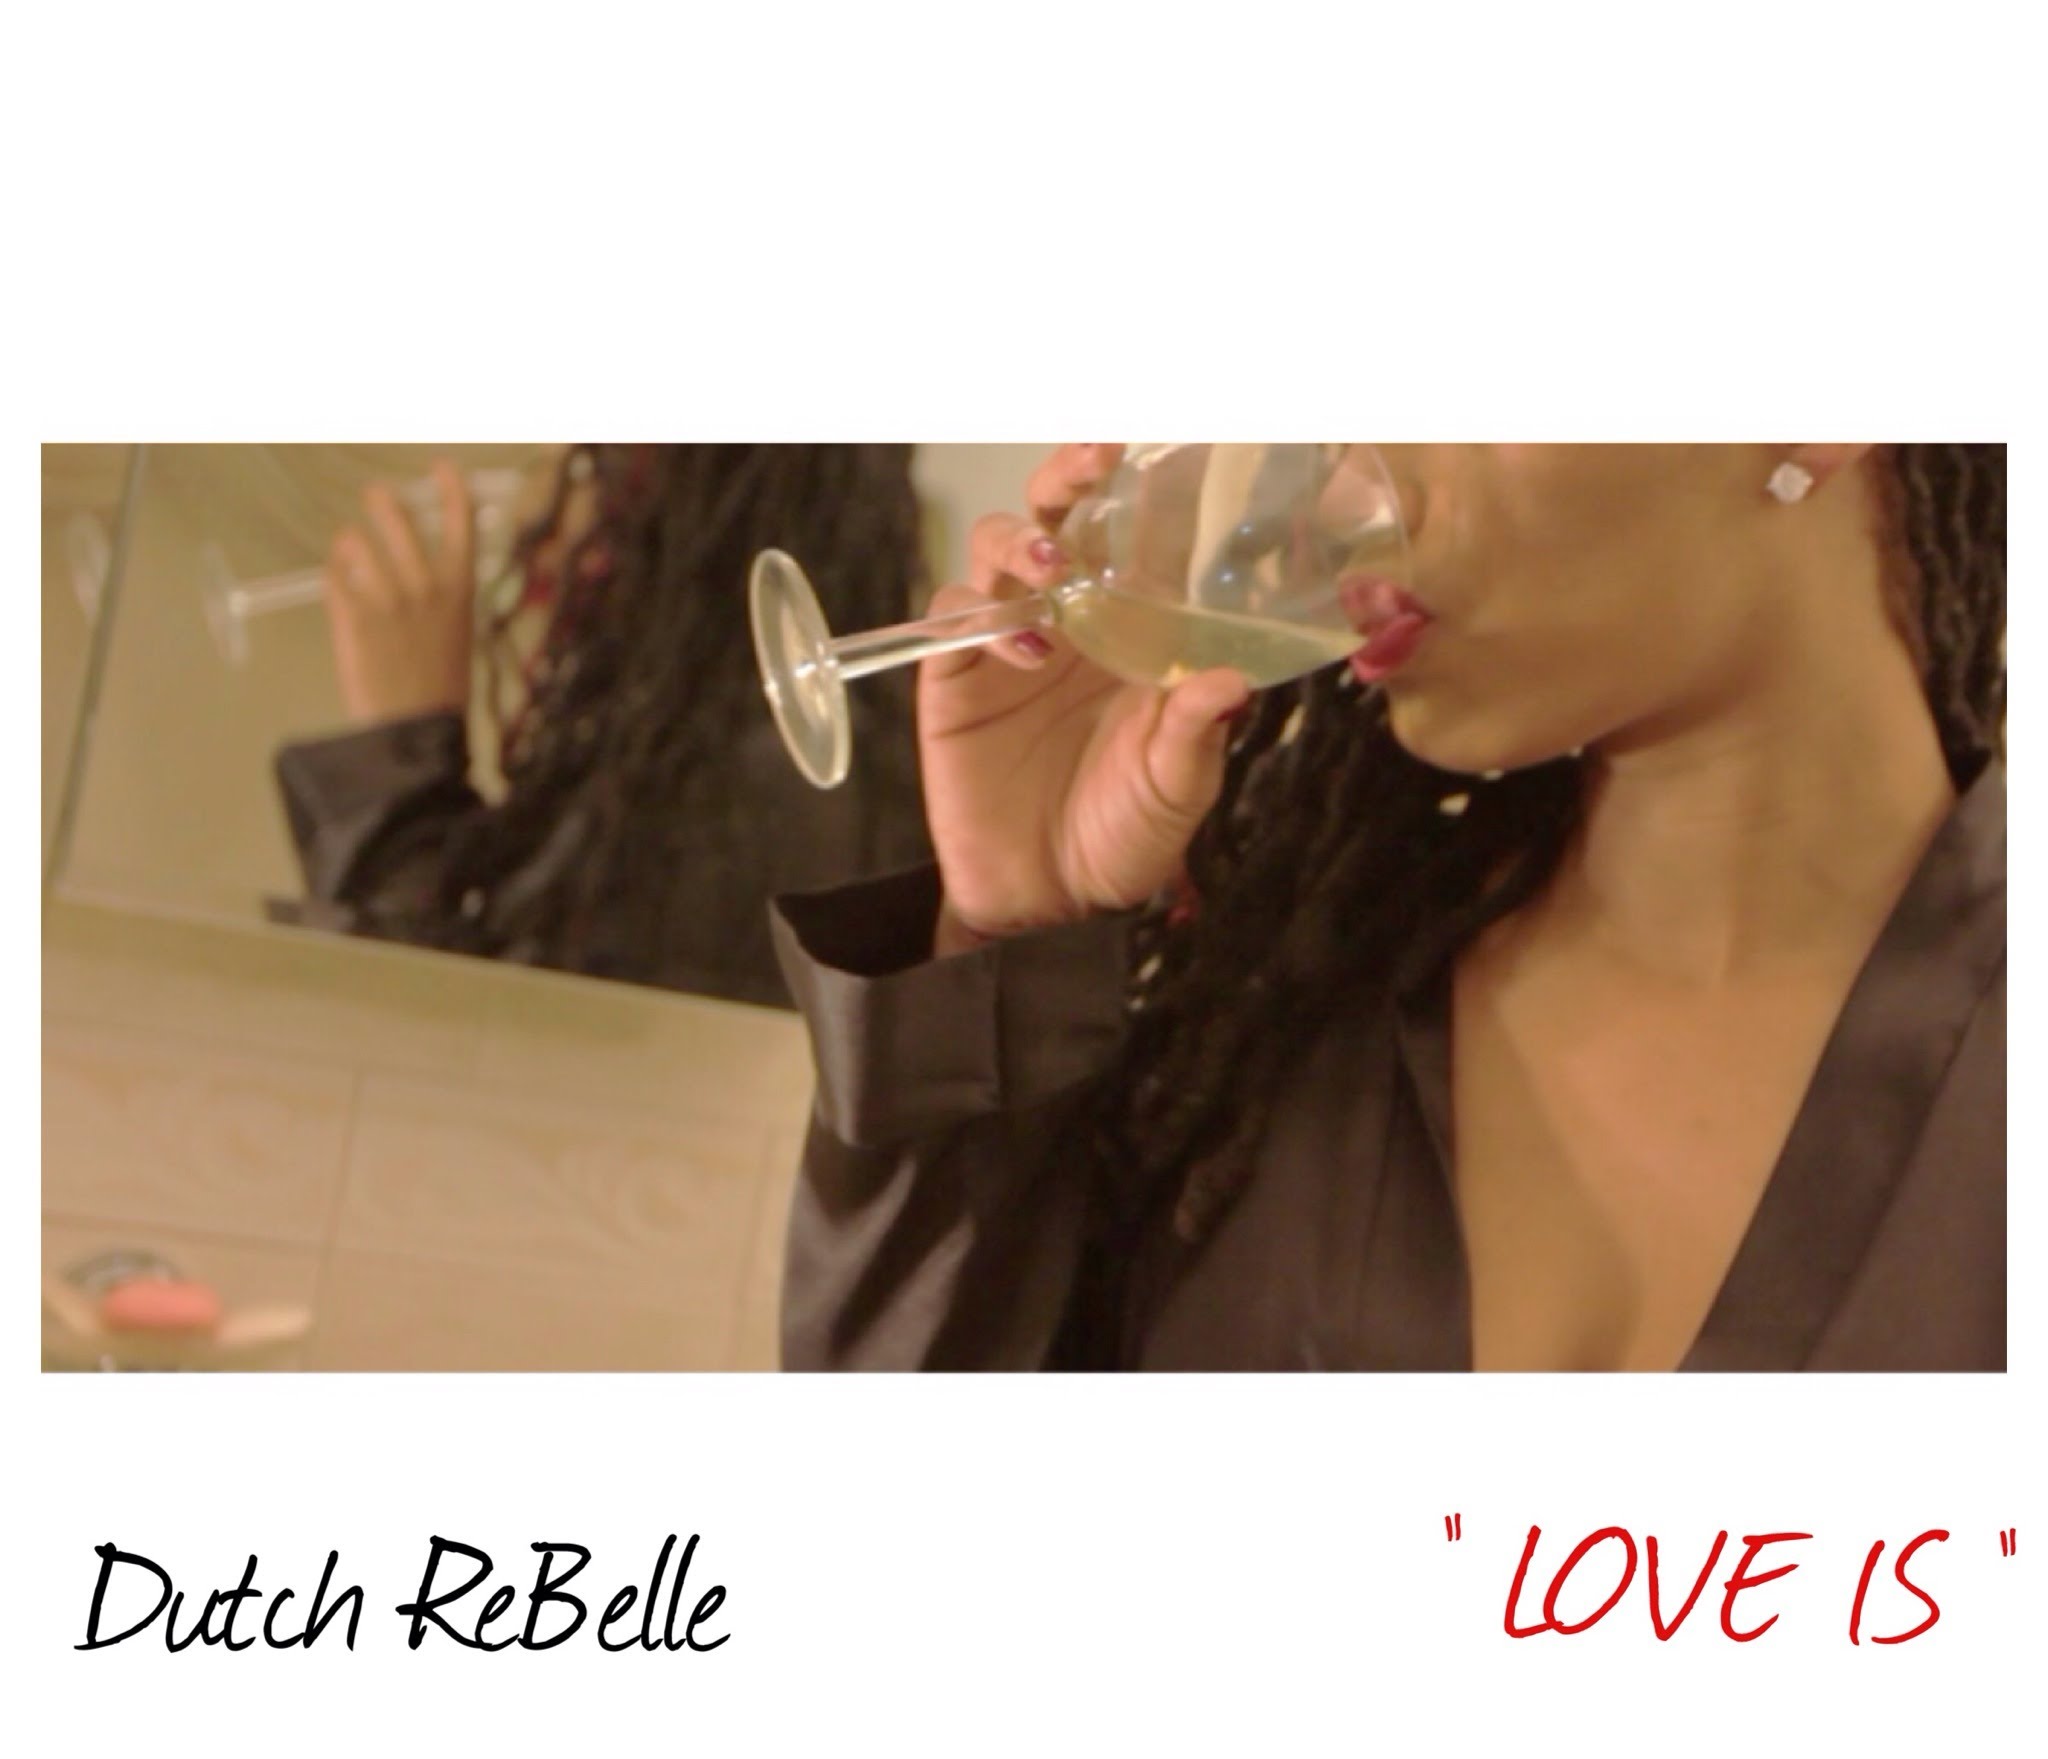 Dutch ReBelle “Love Is” [VIDEO]